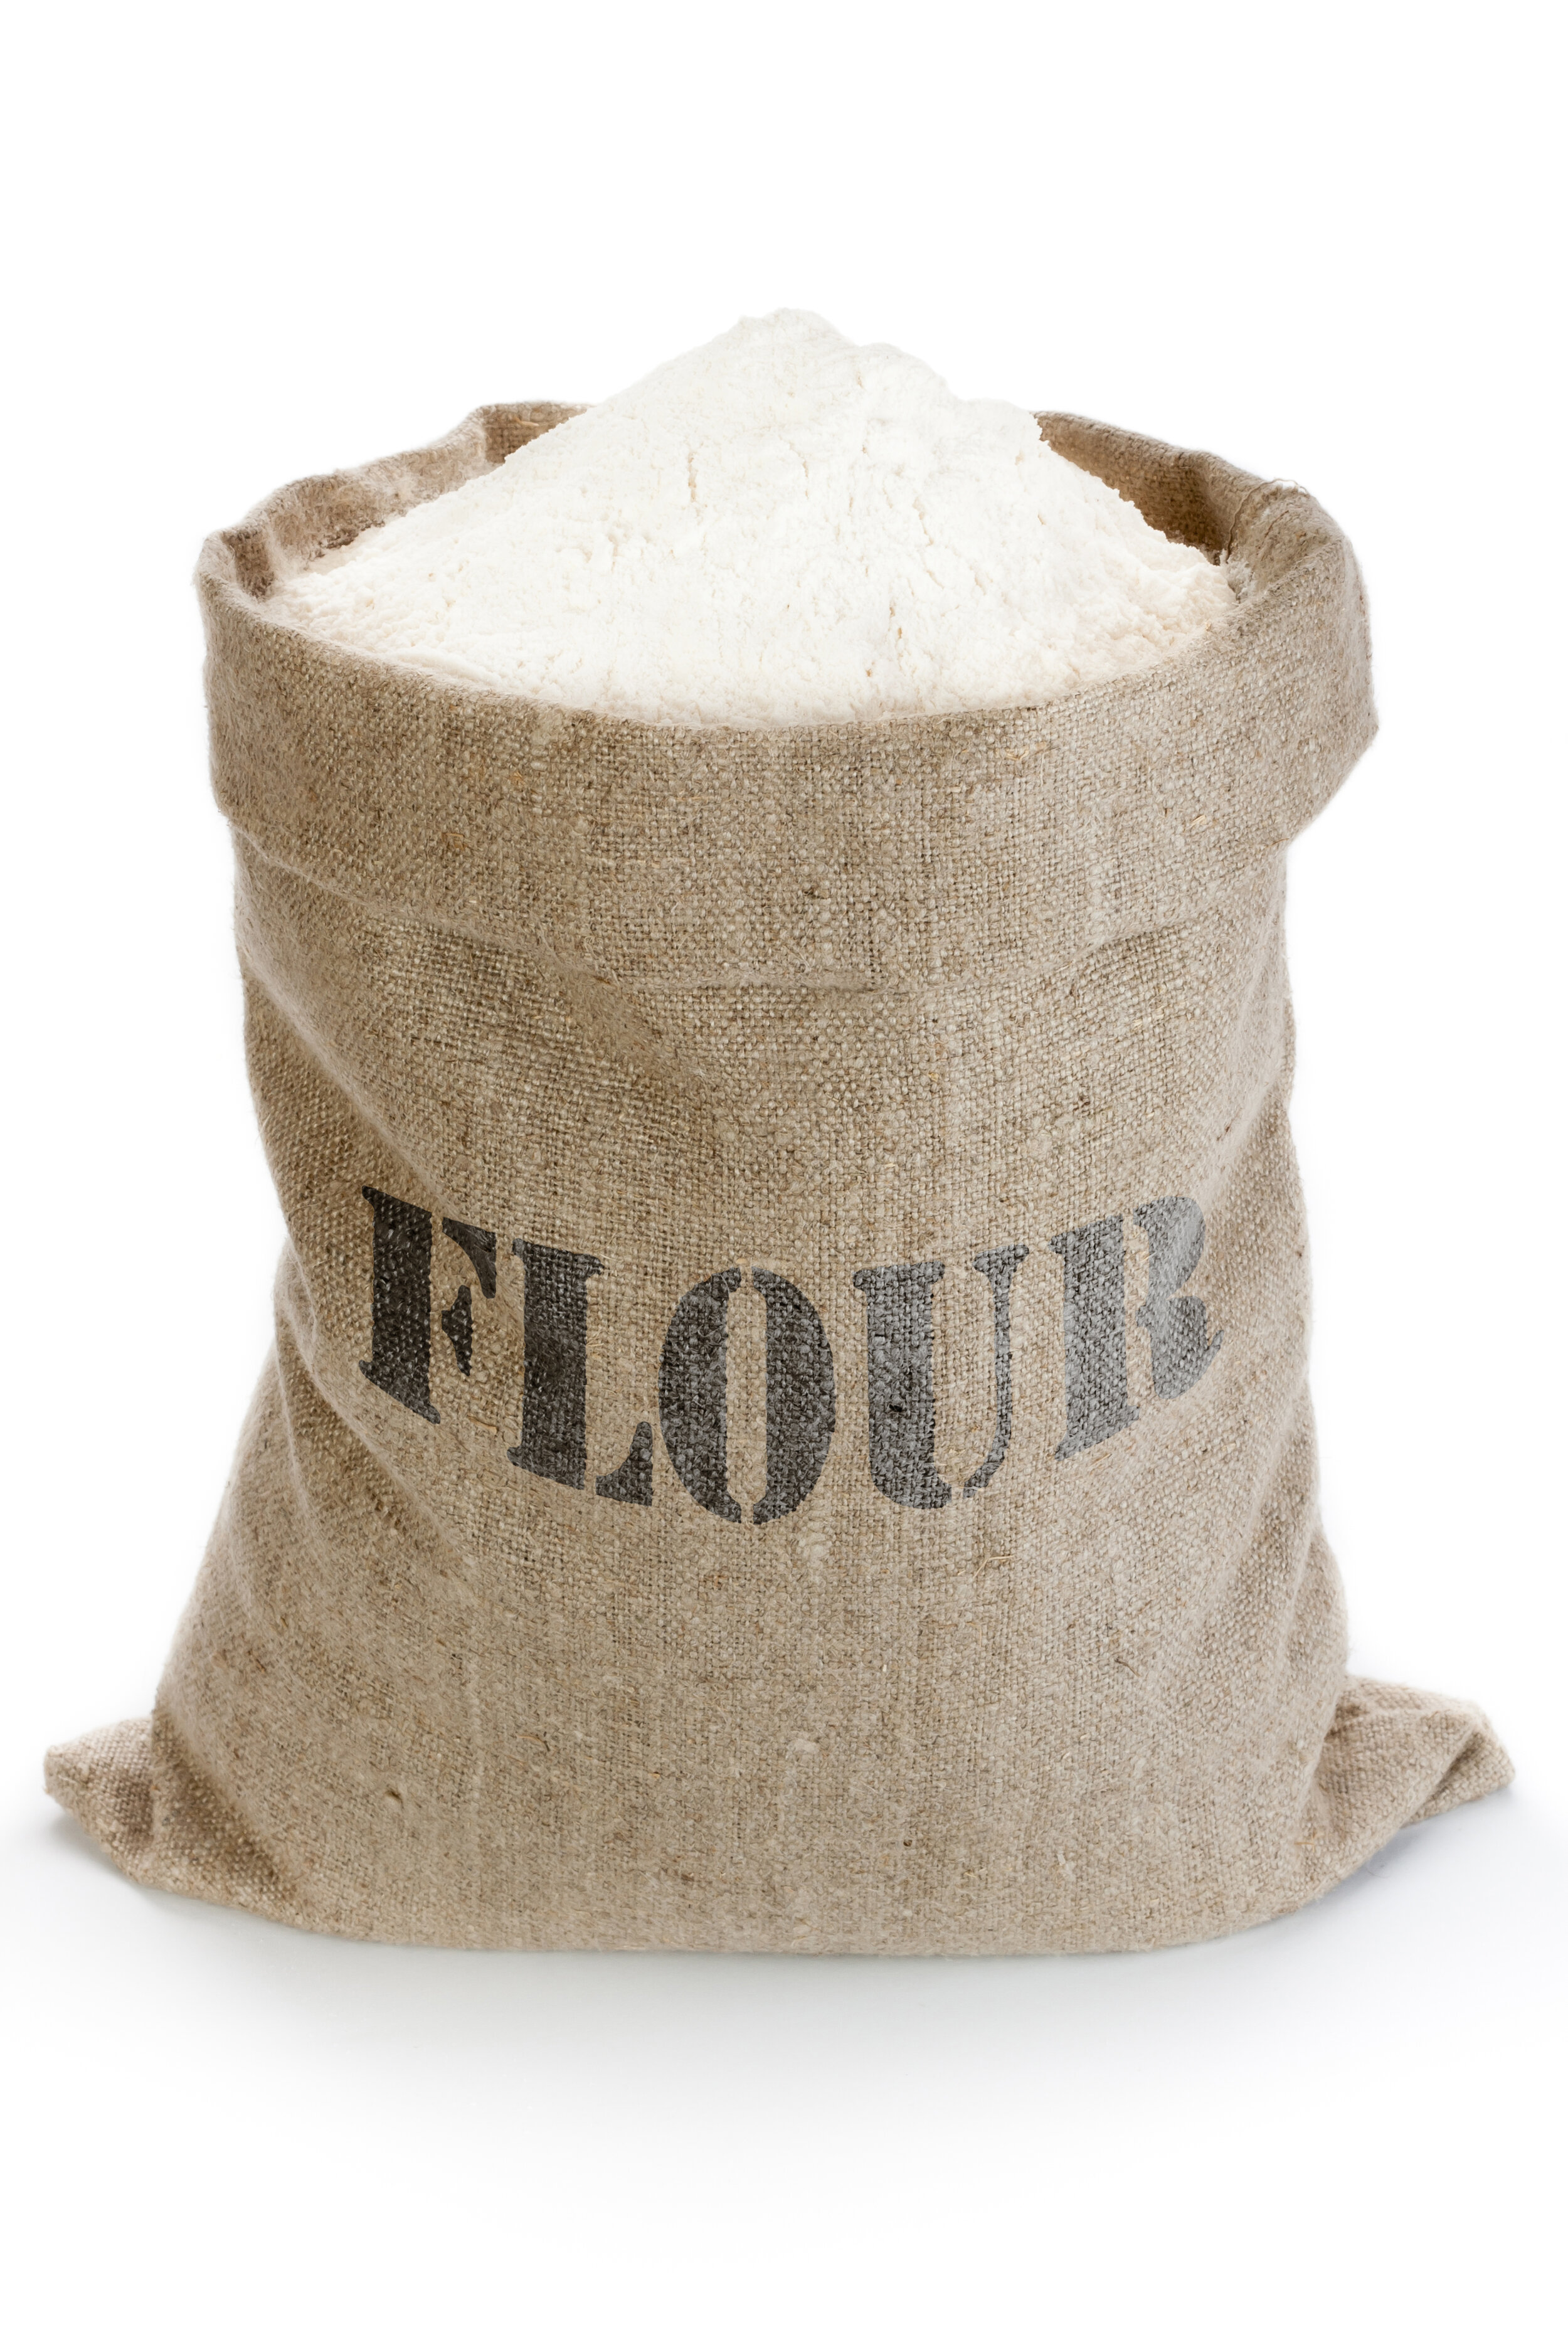 Linen-sack-with-flour-000034996038_Large.jpg